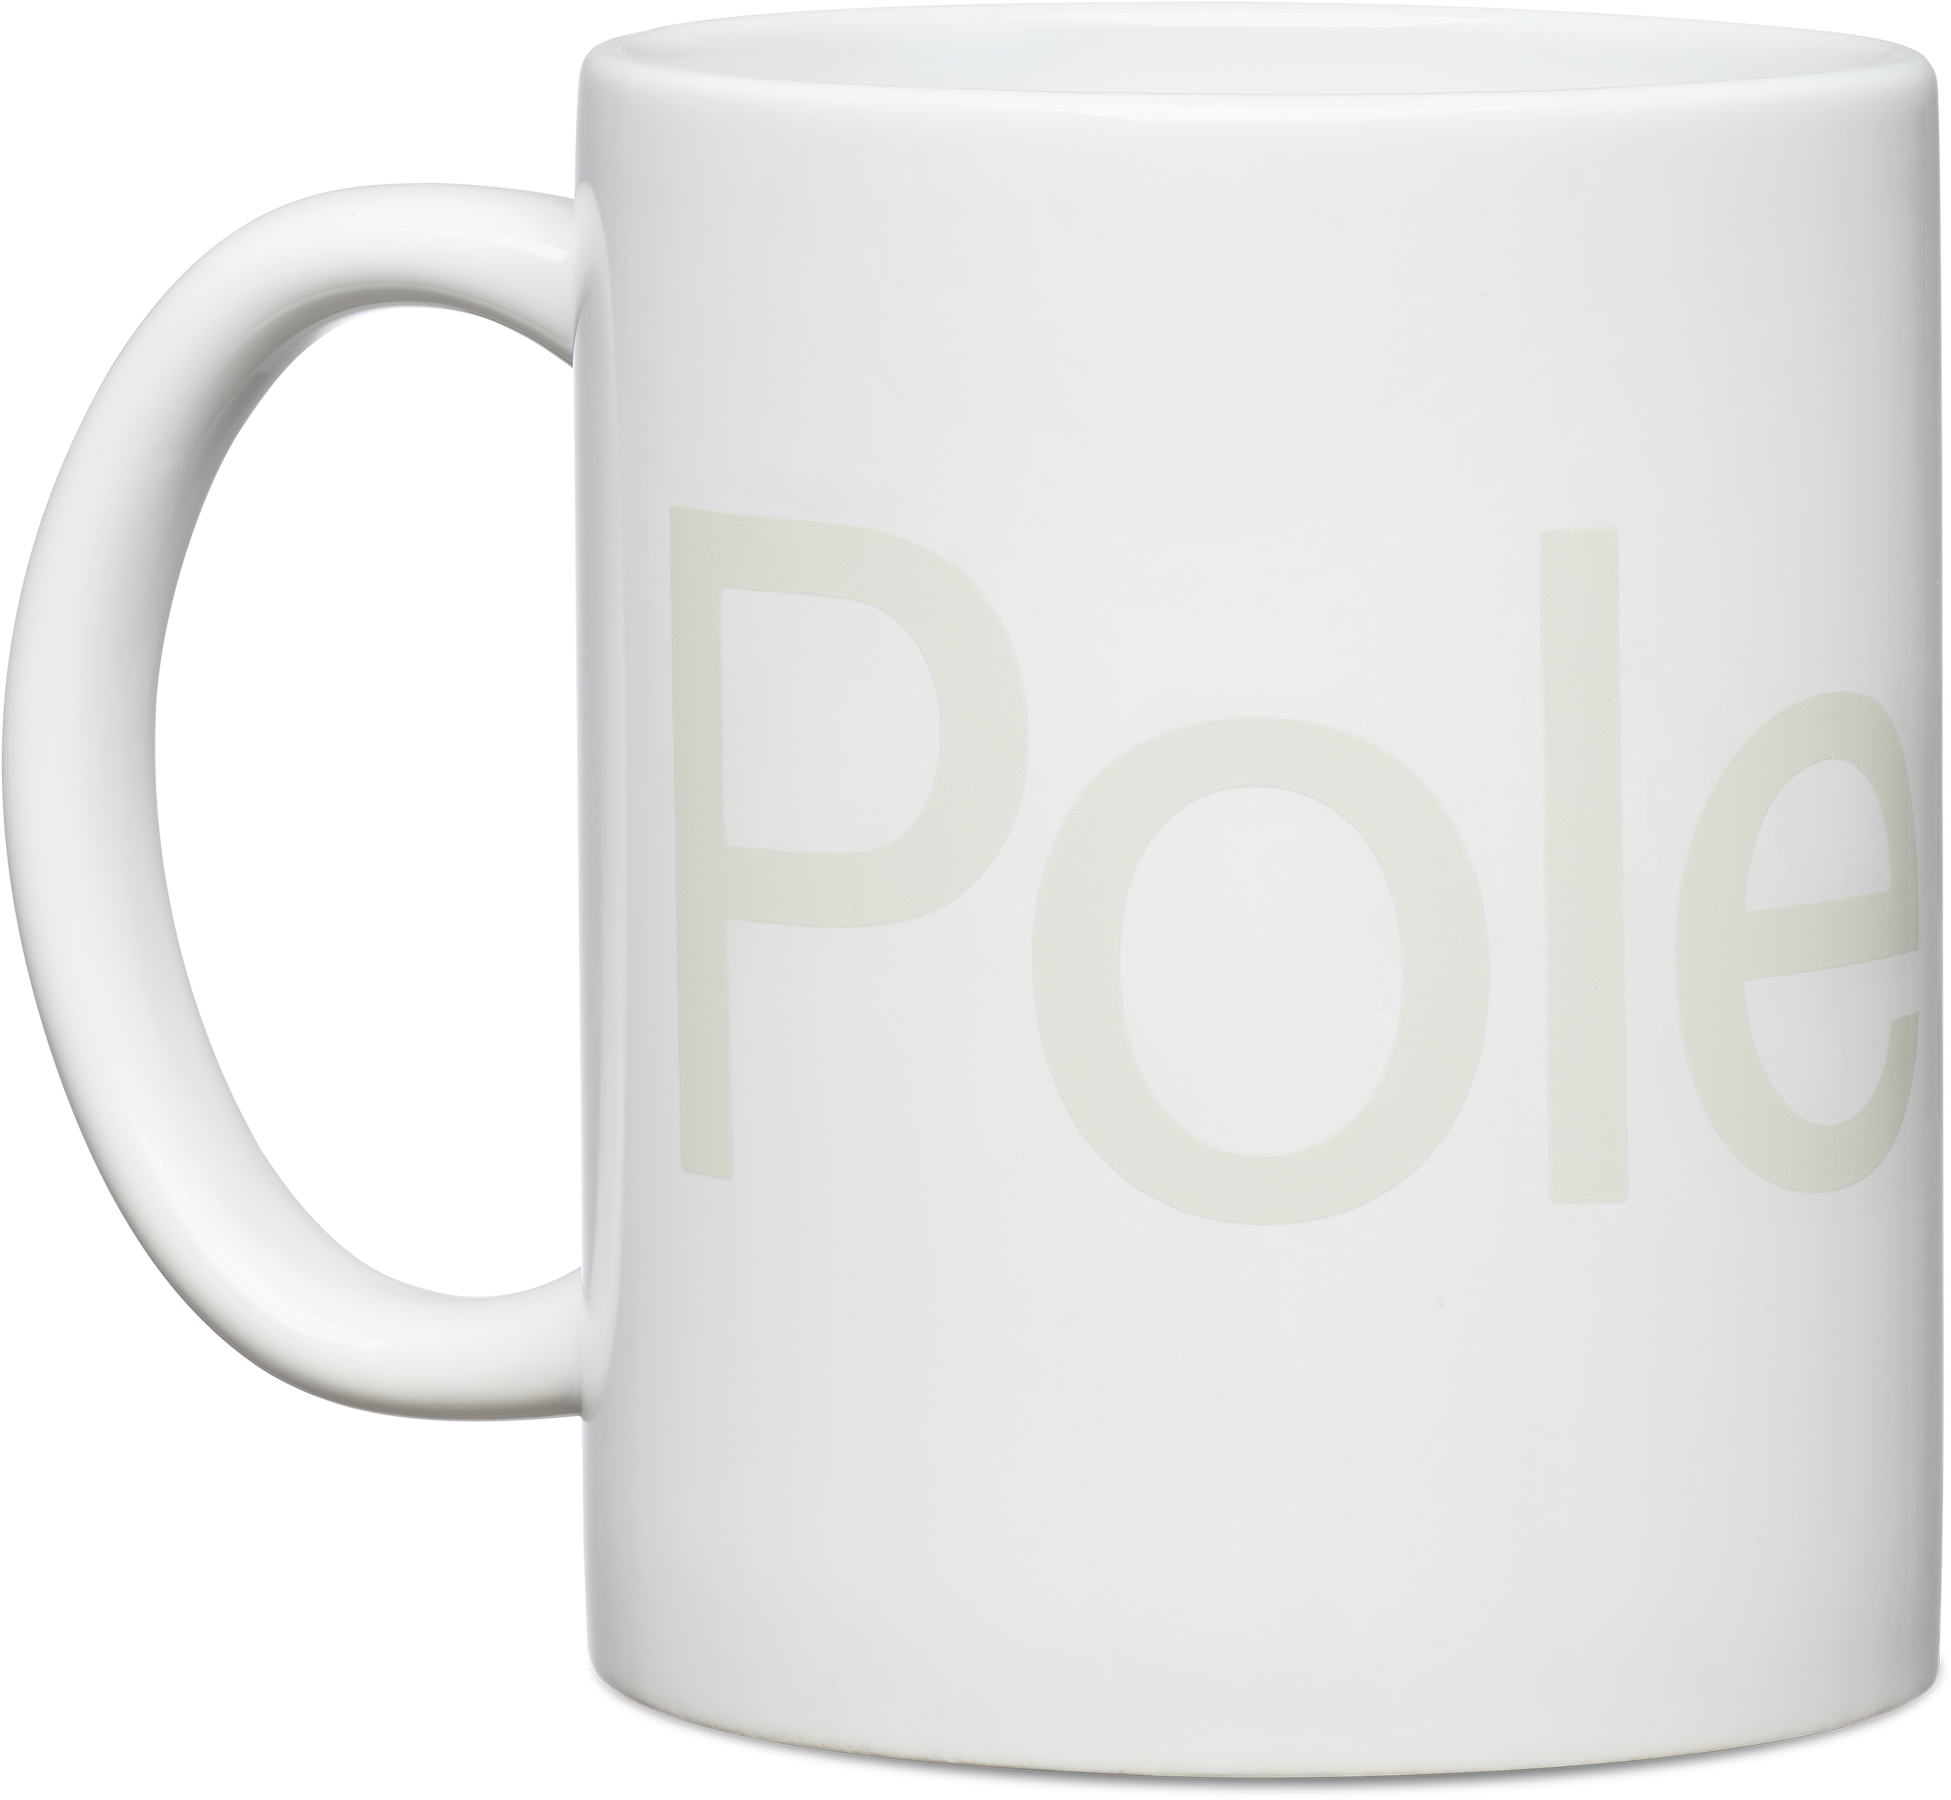 https://additionals.polestar.com/wp-content/uploads/2022/09/Polestar_mugg1_Feature.png